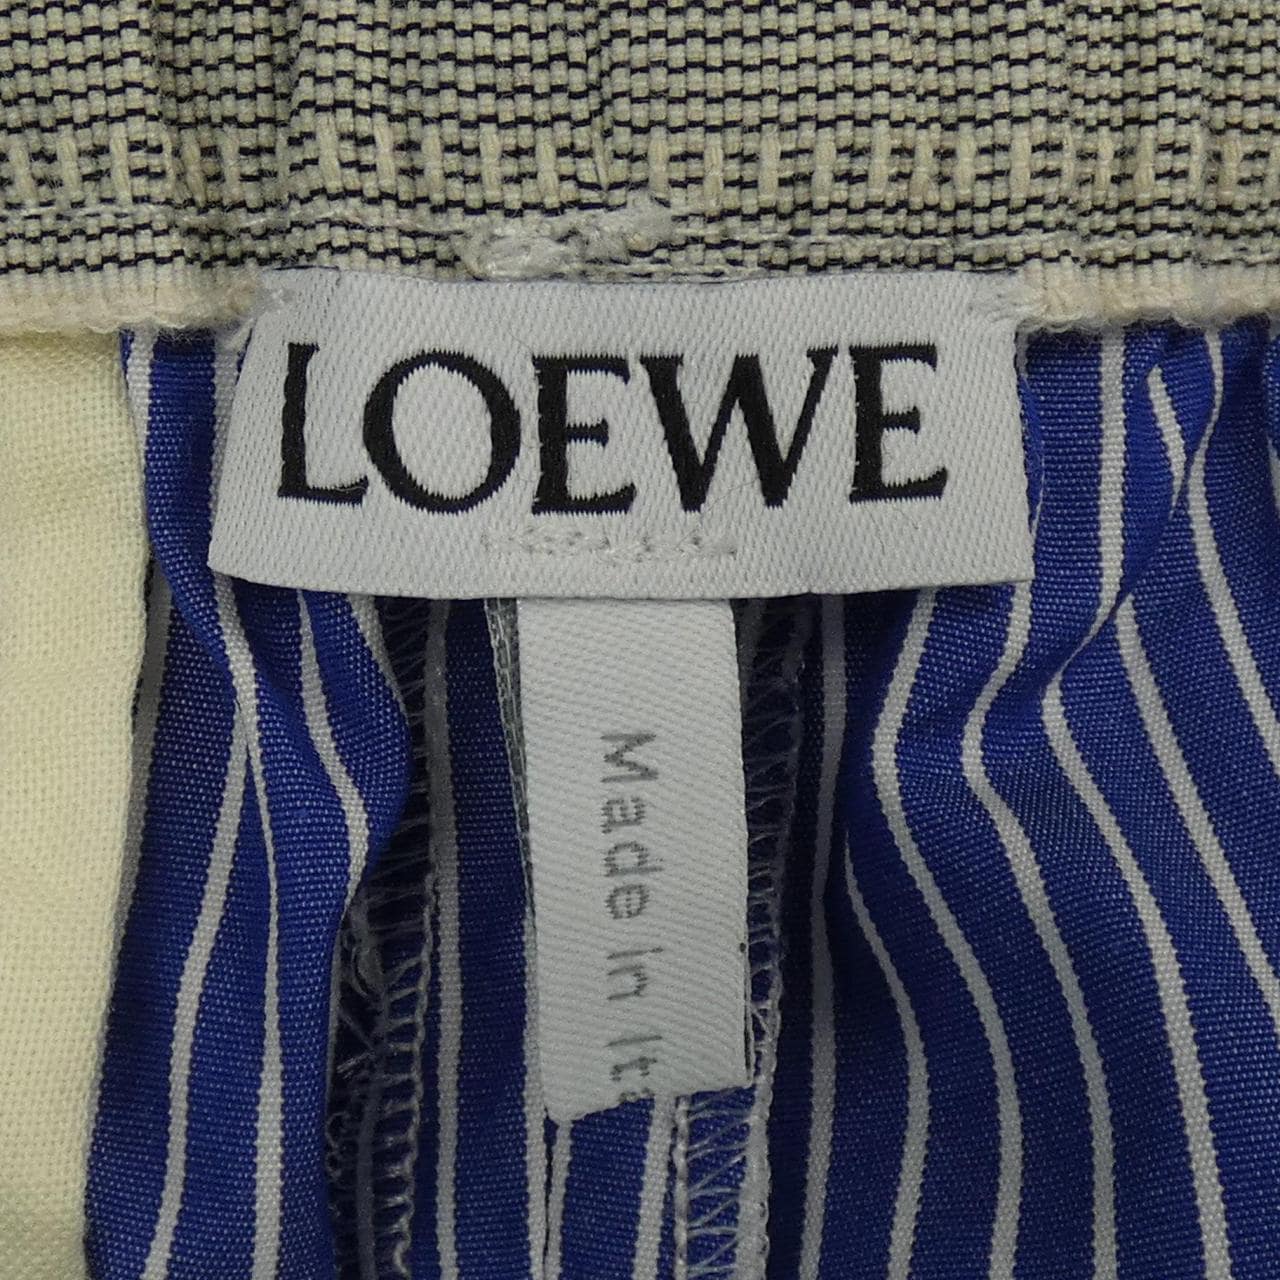 Loeve LOEWE短裤